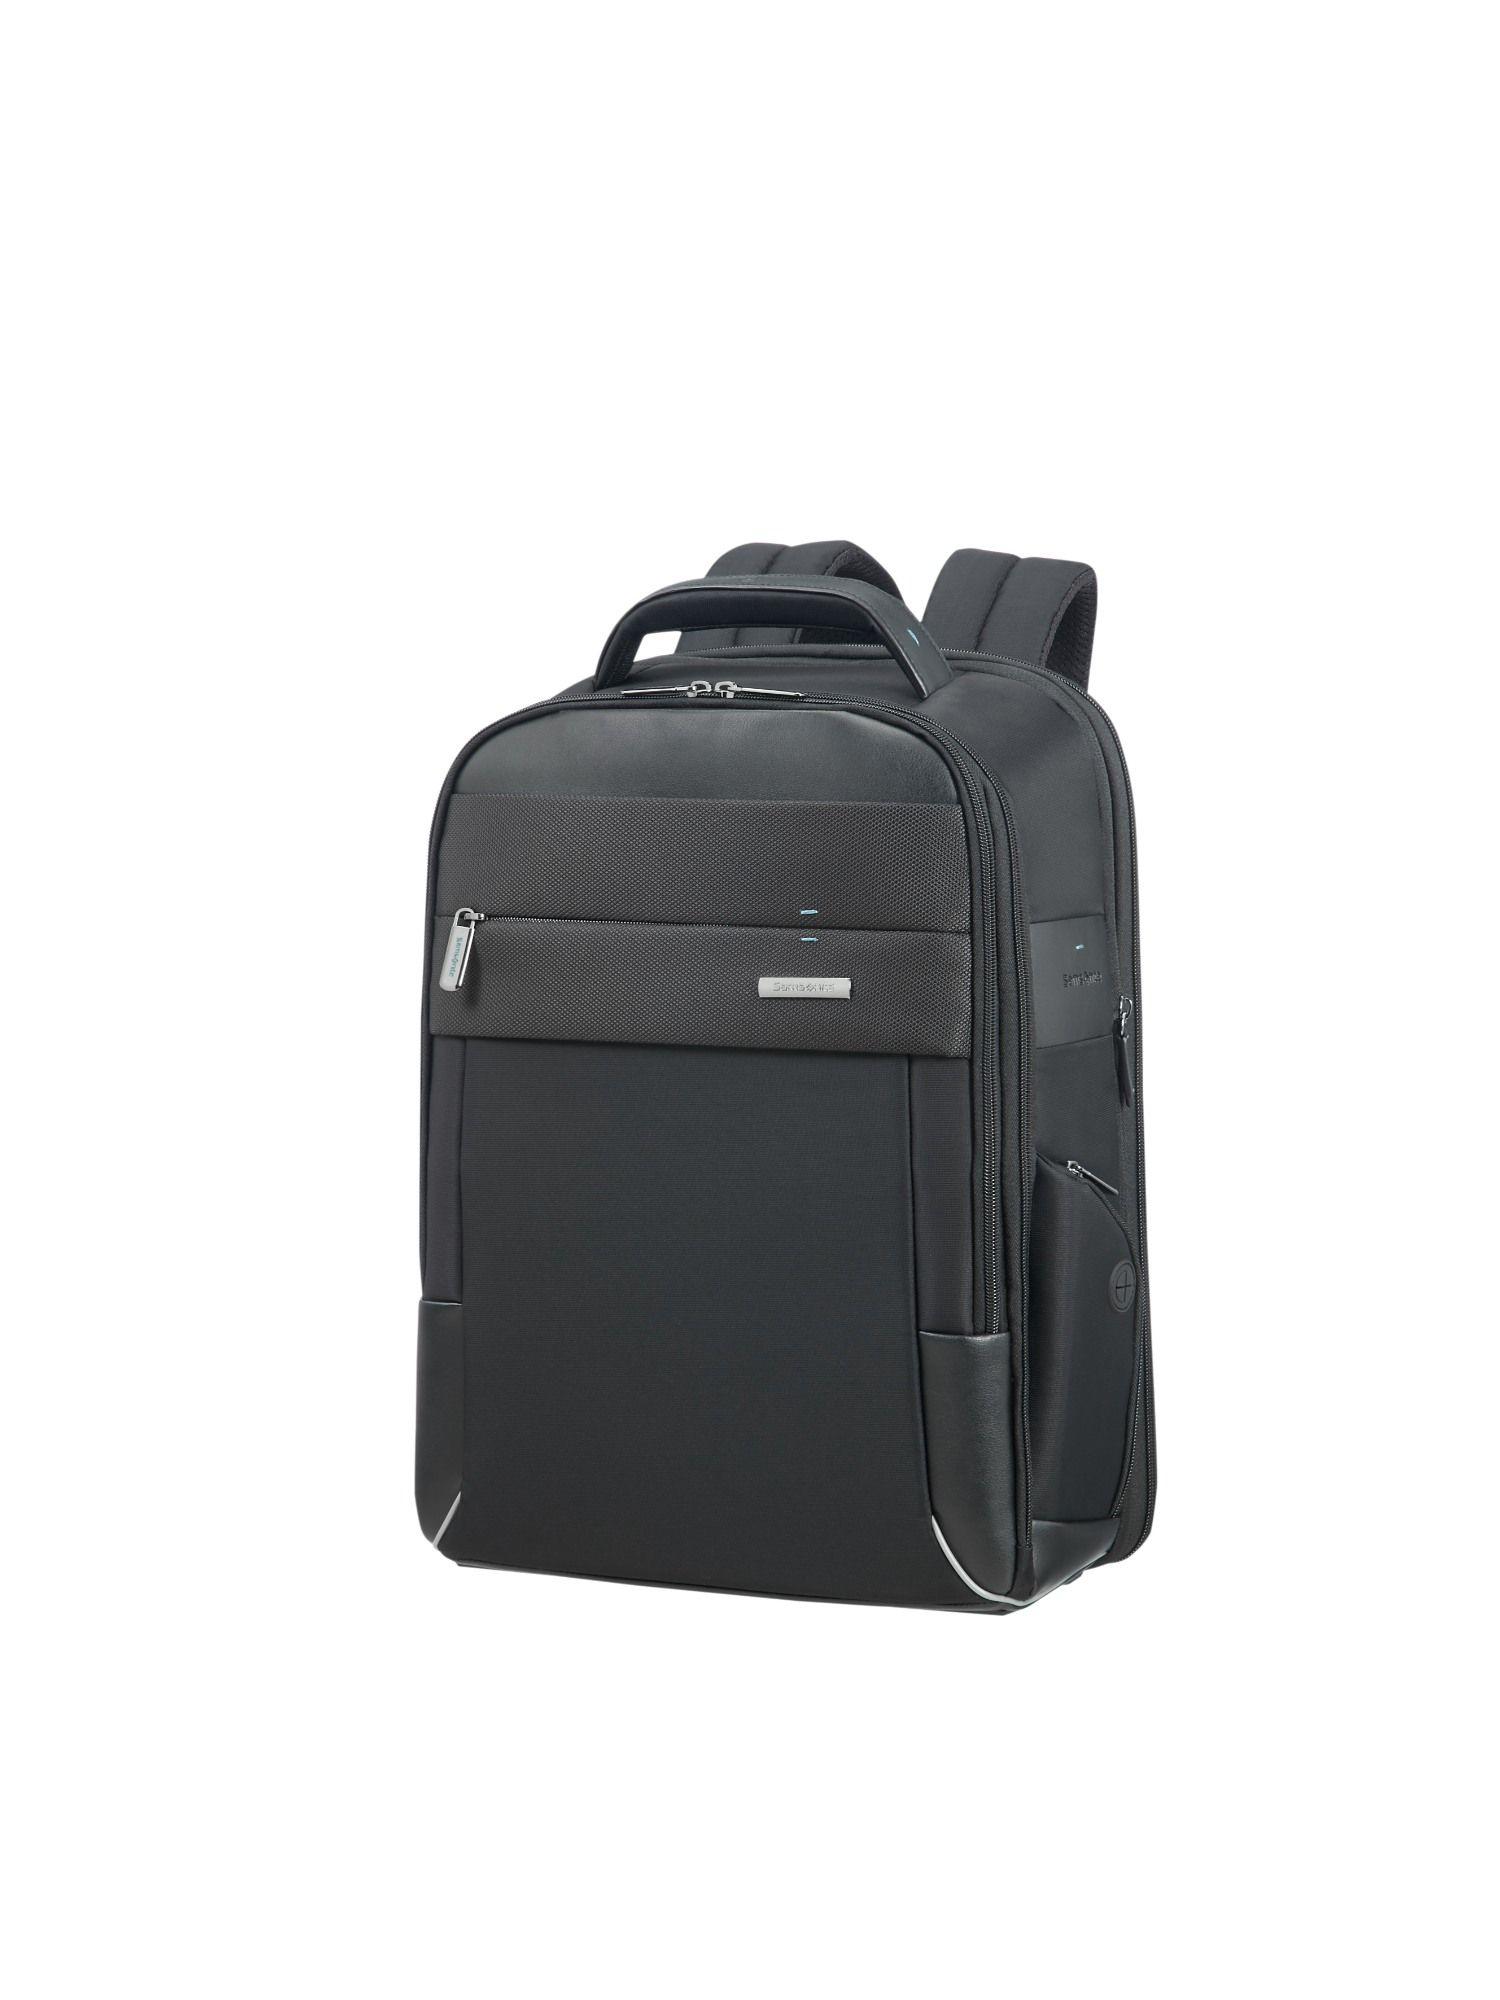 spectrolite 2.0 backpack -in-black